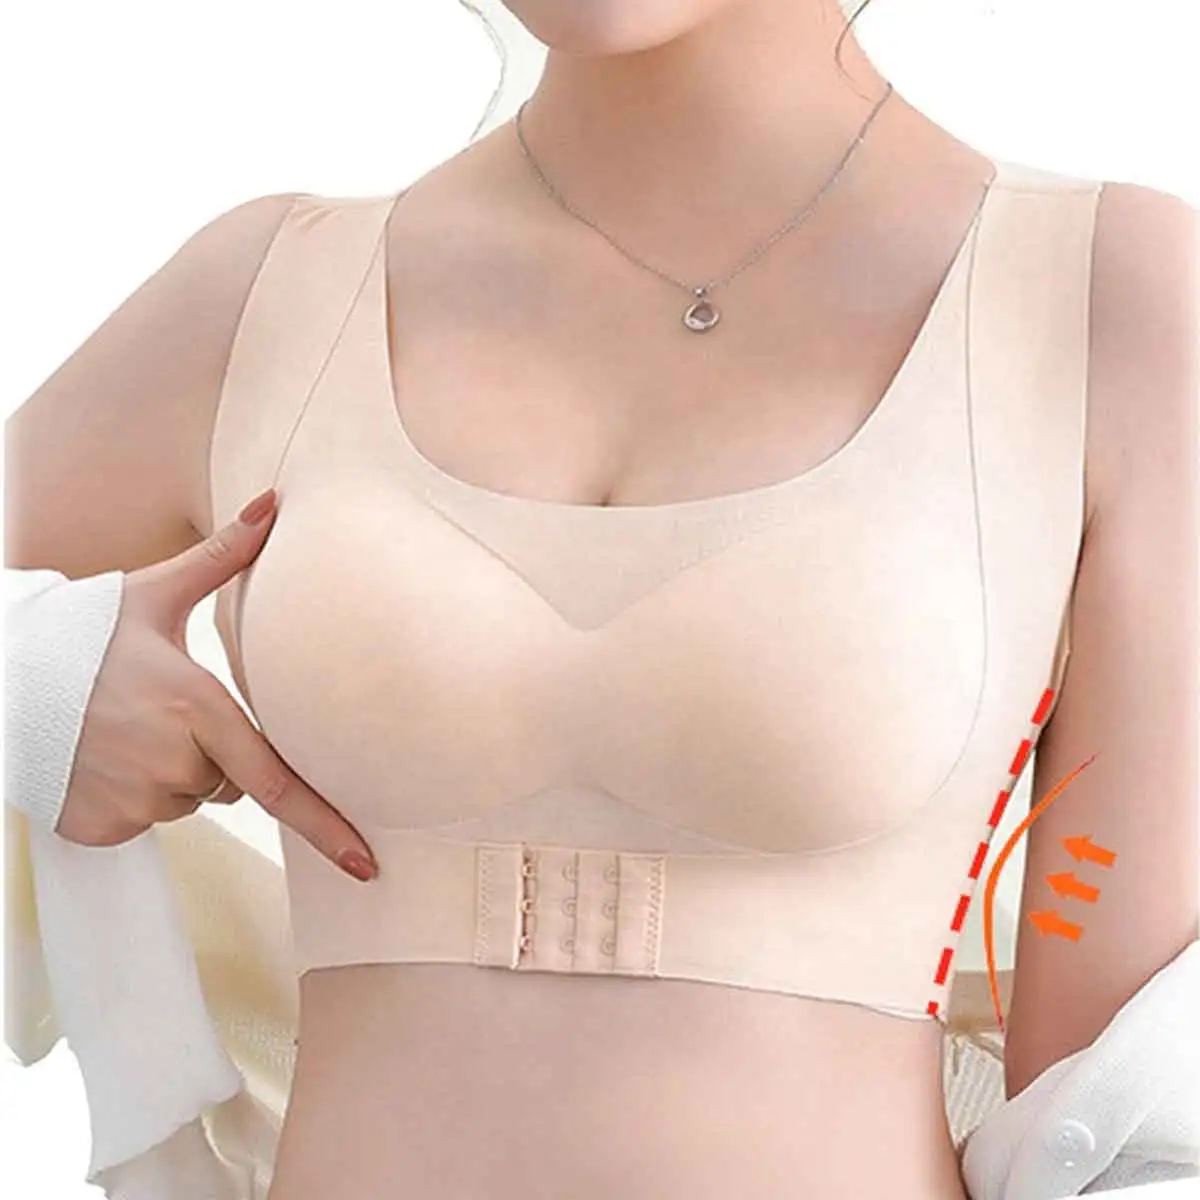 Buy push up bra at Best Price in Bangladesh - (Nov, 2022) 